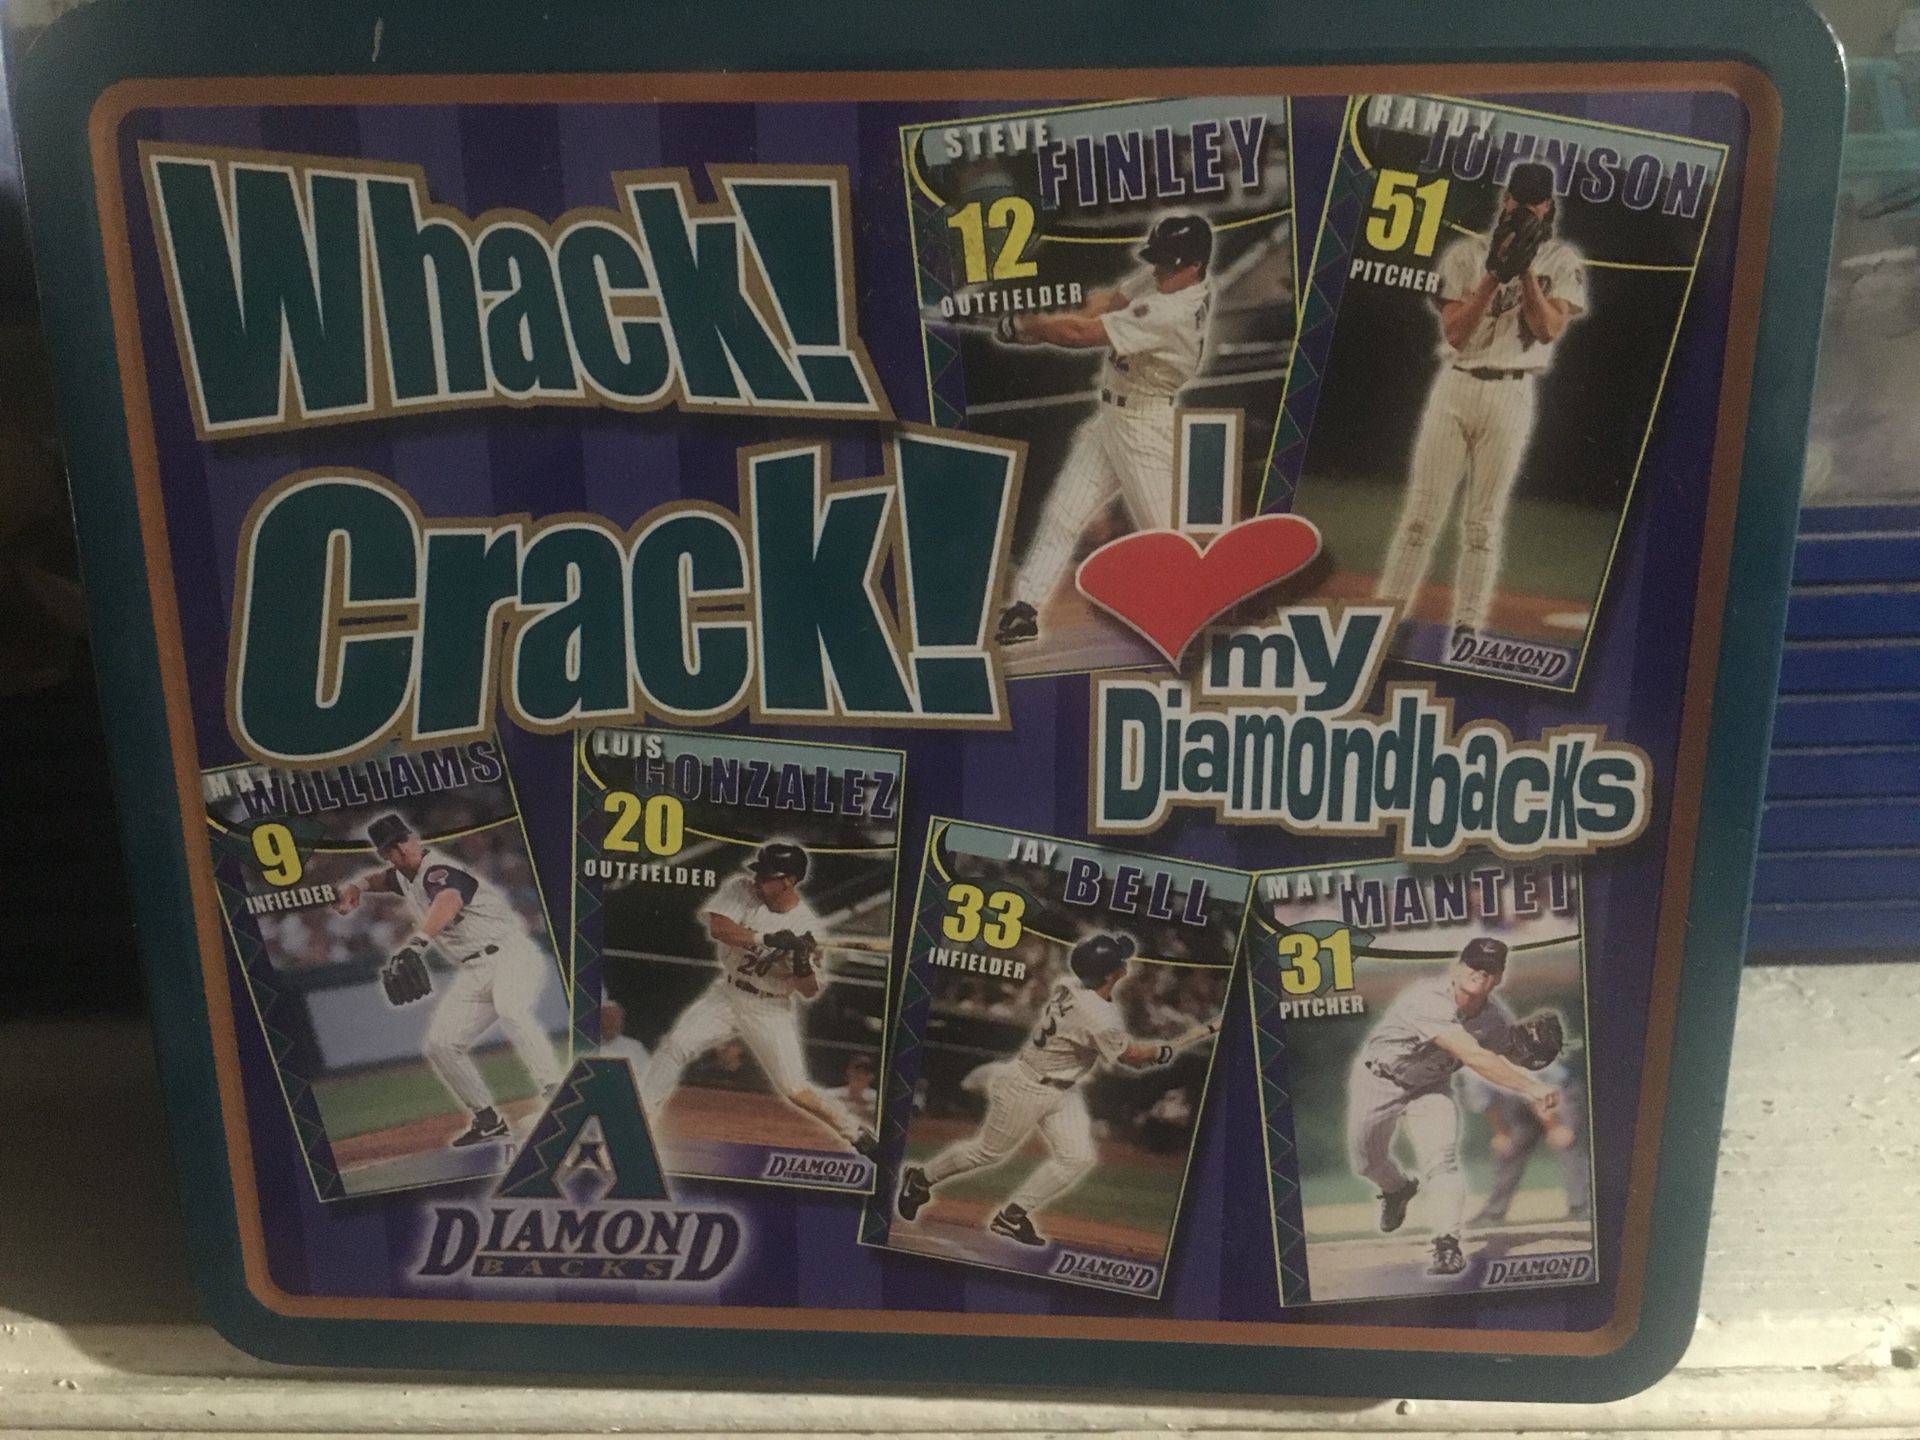 Diamondbacks Dbacks Lunch Box.